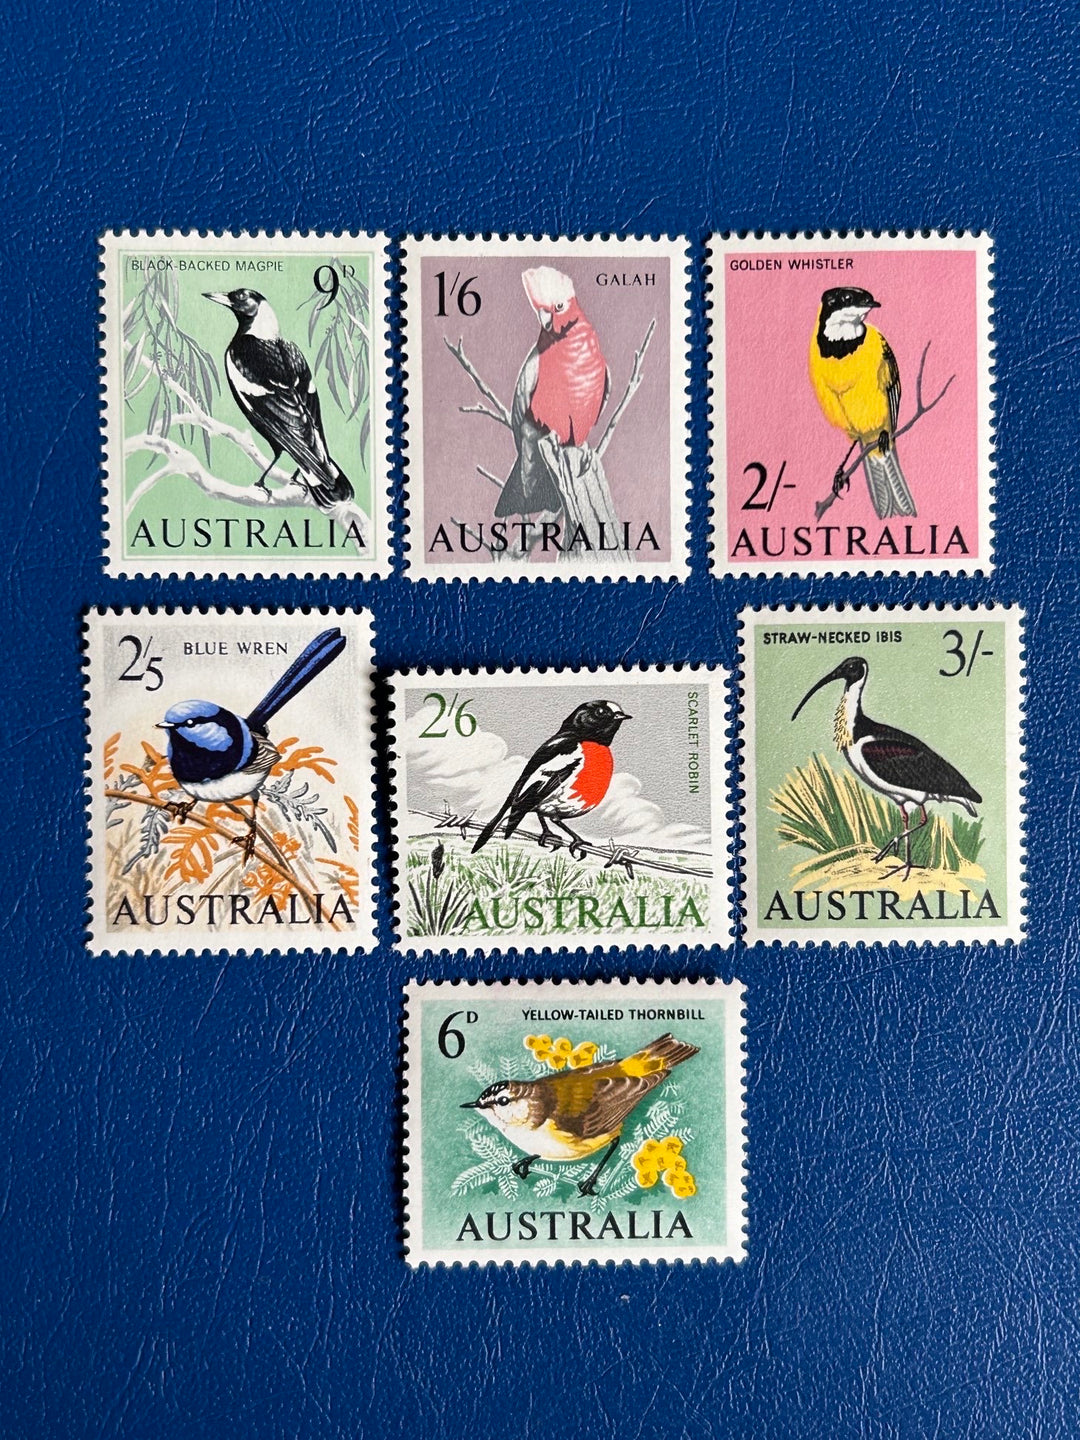 Australia - Original Vintage Postage Stamps - 1966 - Australian Birds - for the collector, artist or crafter